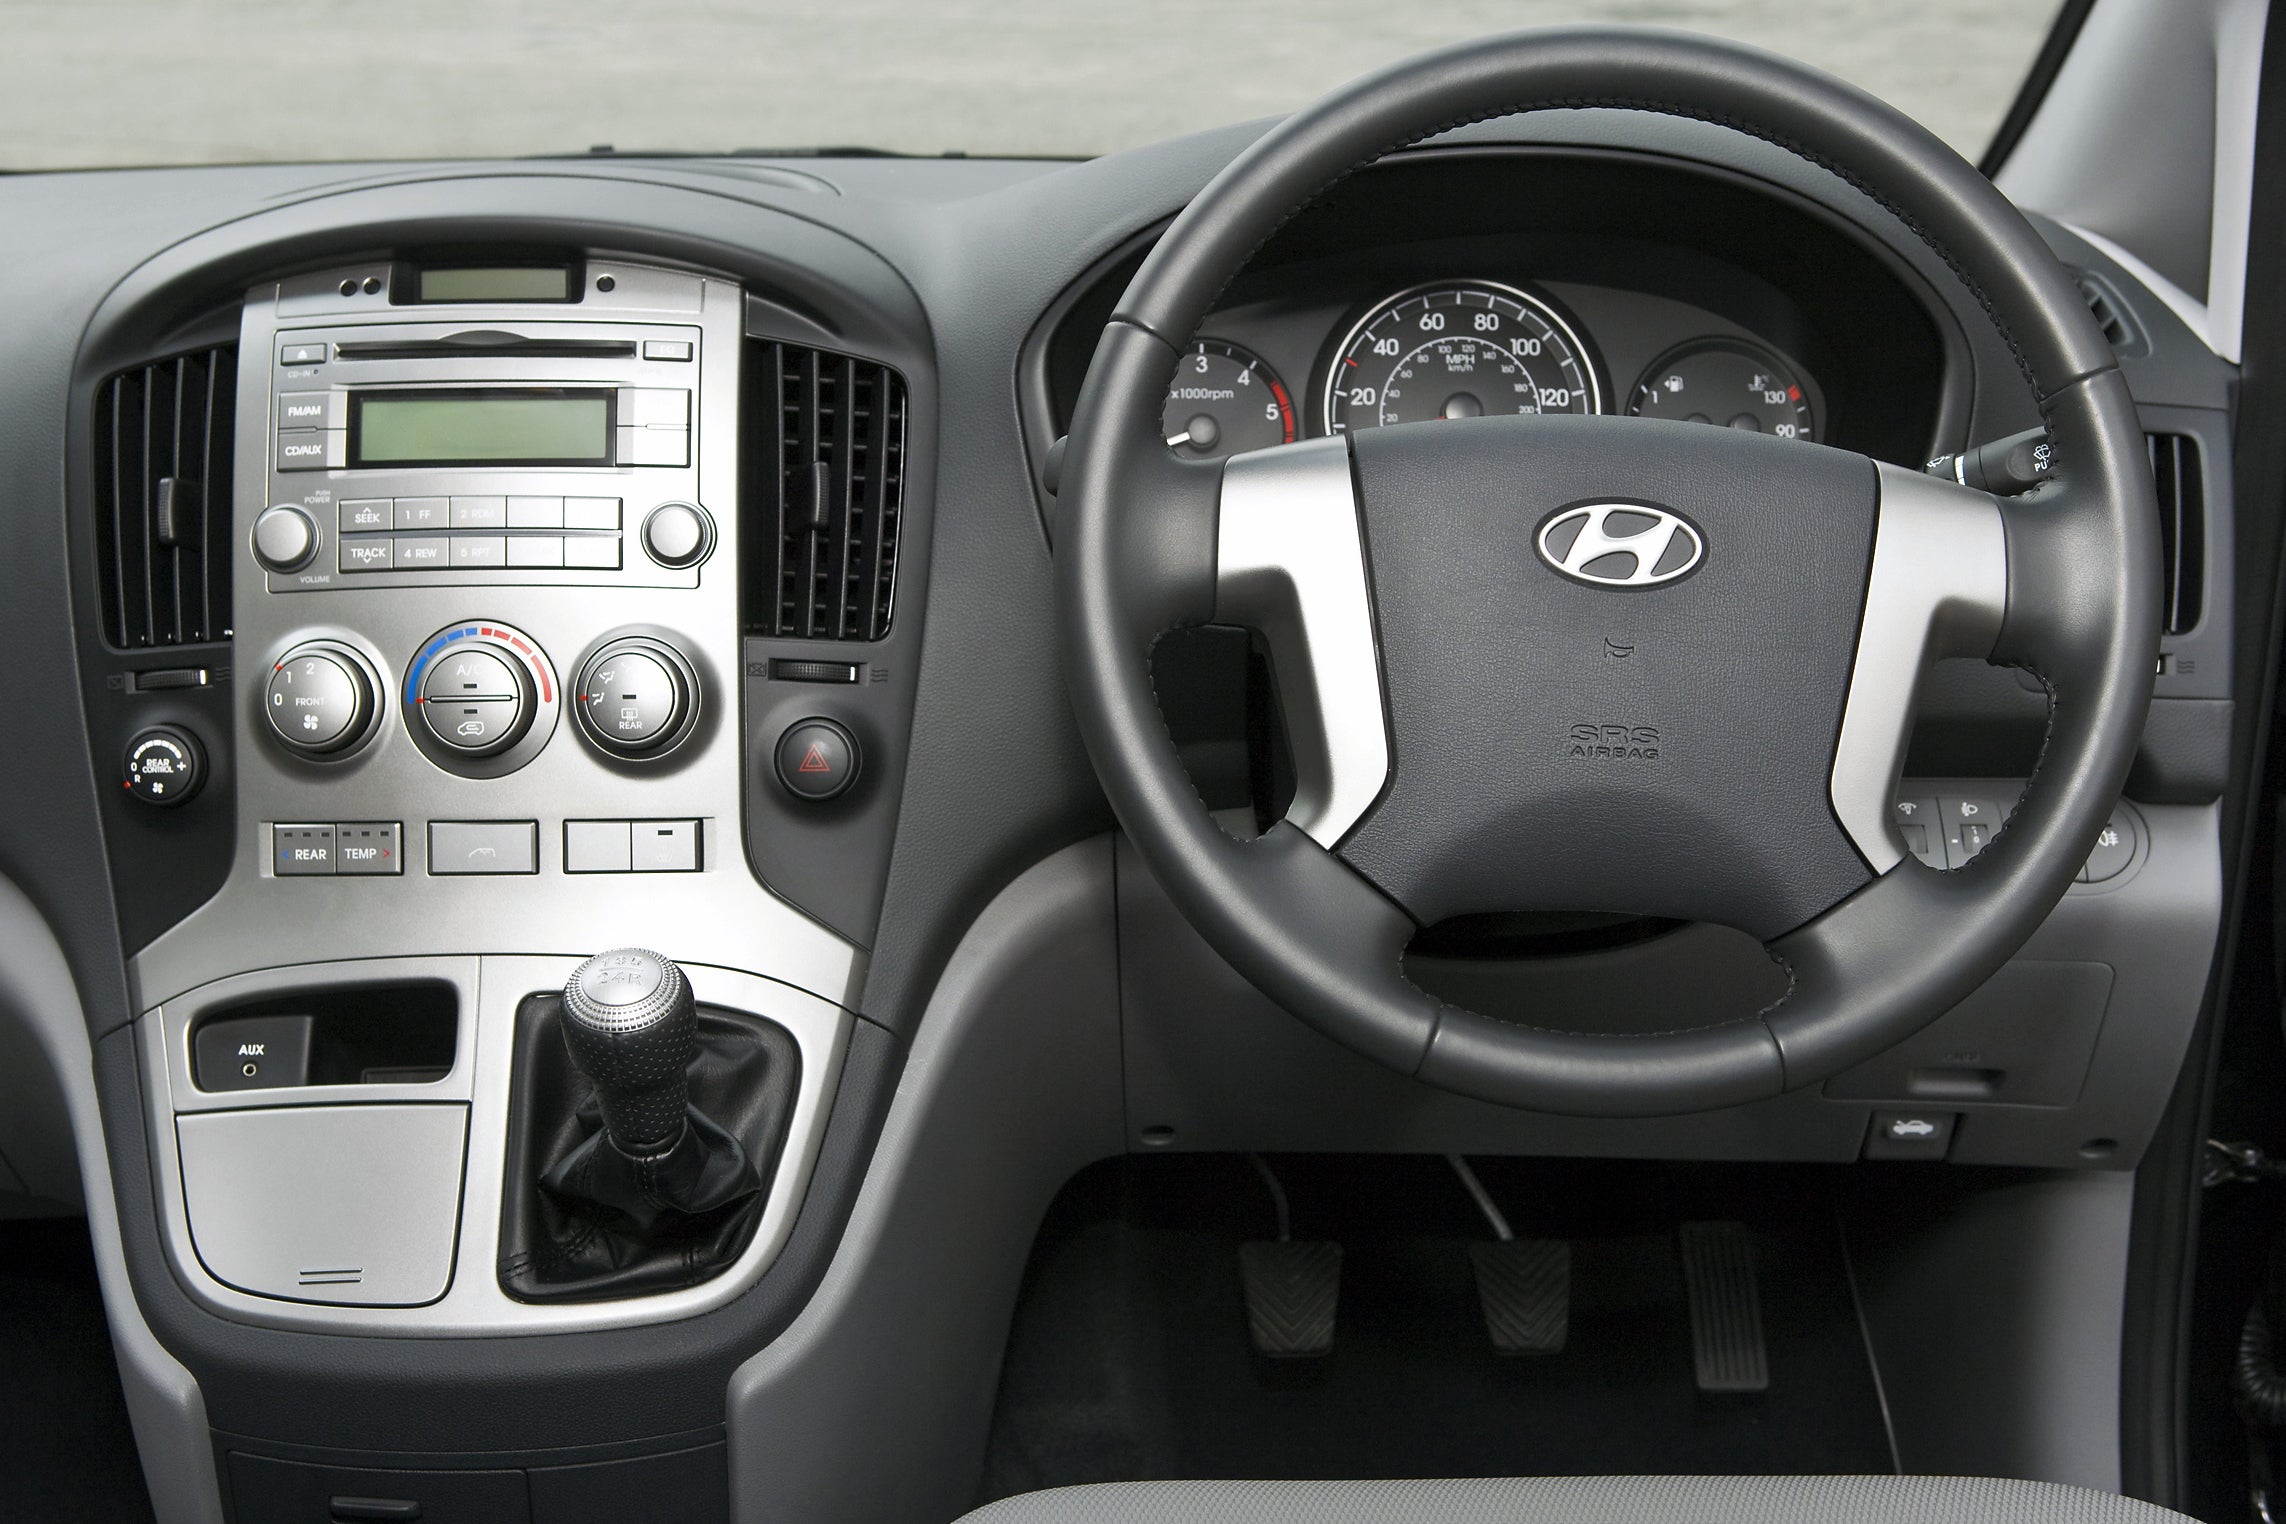 Hyundai i800 front interior